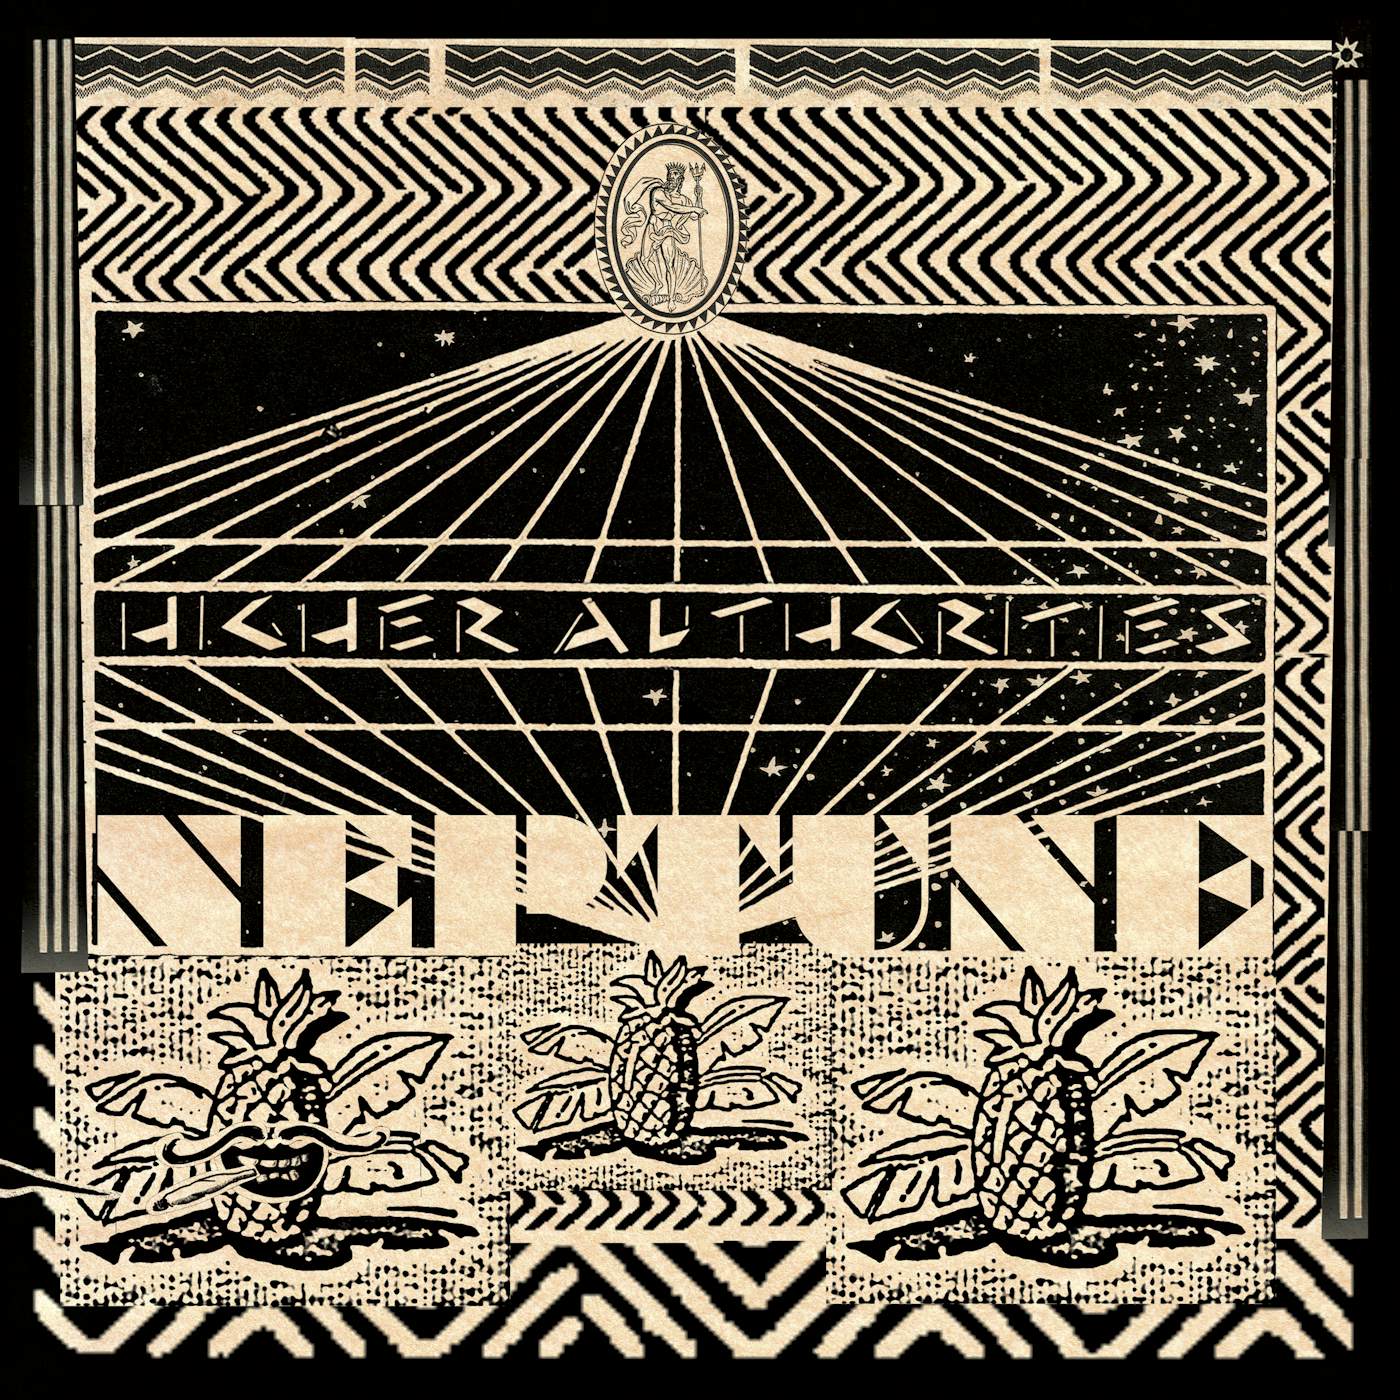 Higher Authorities Neptune Vinyl Record